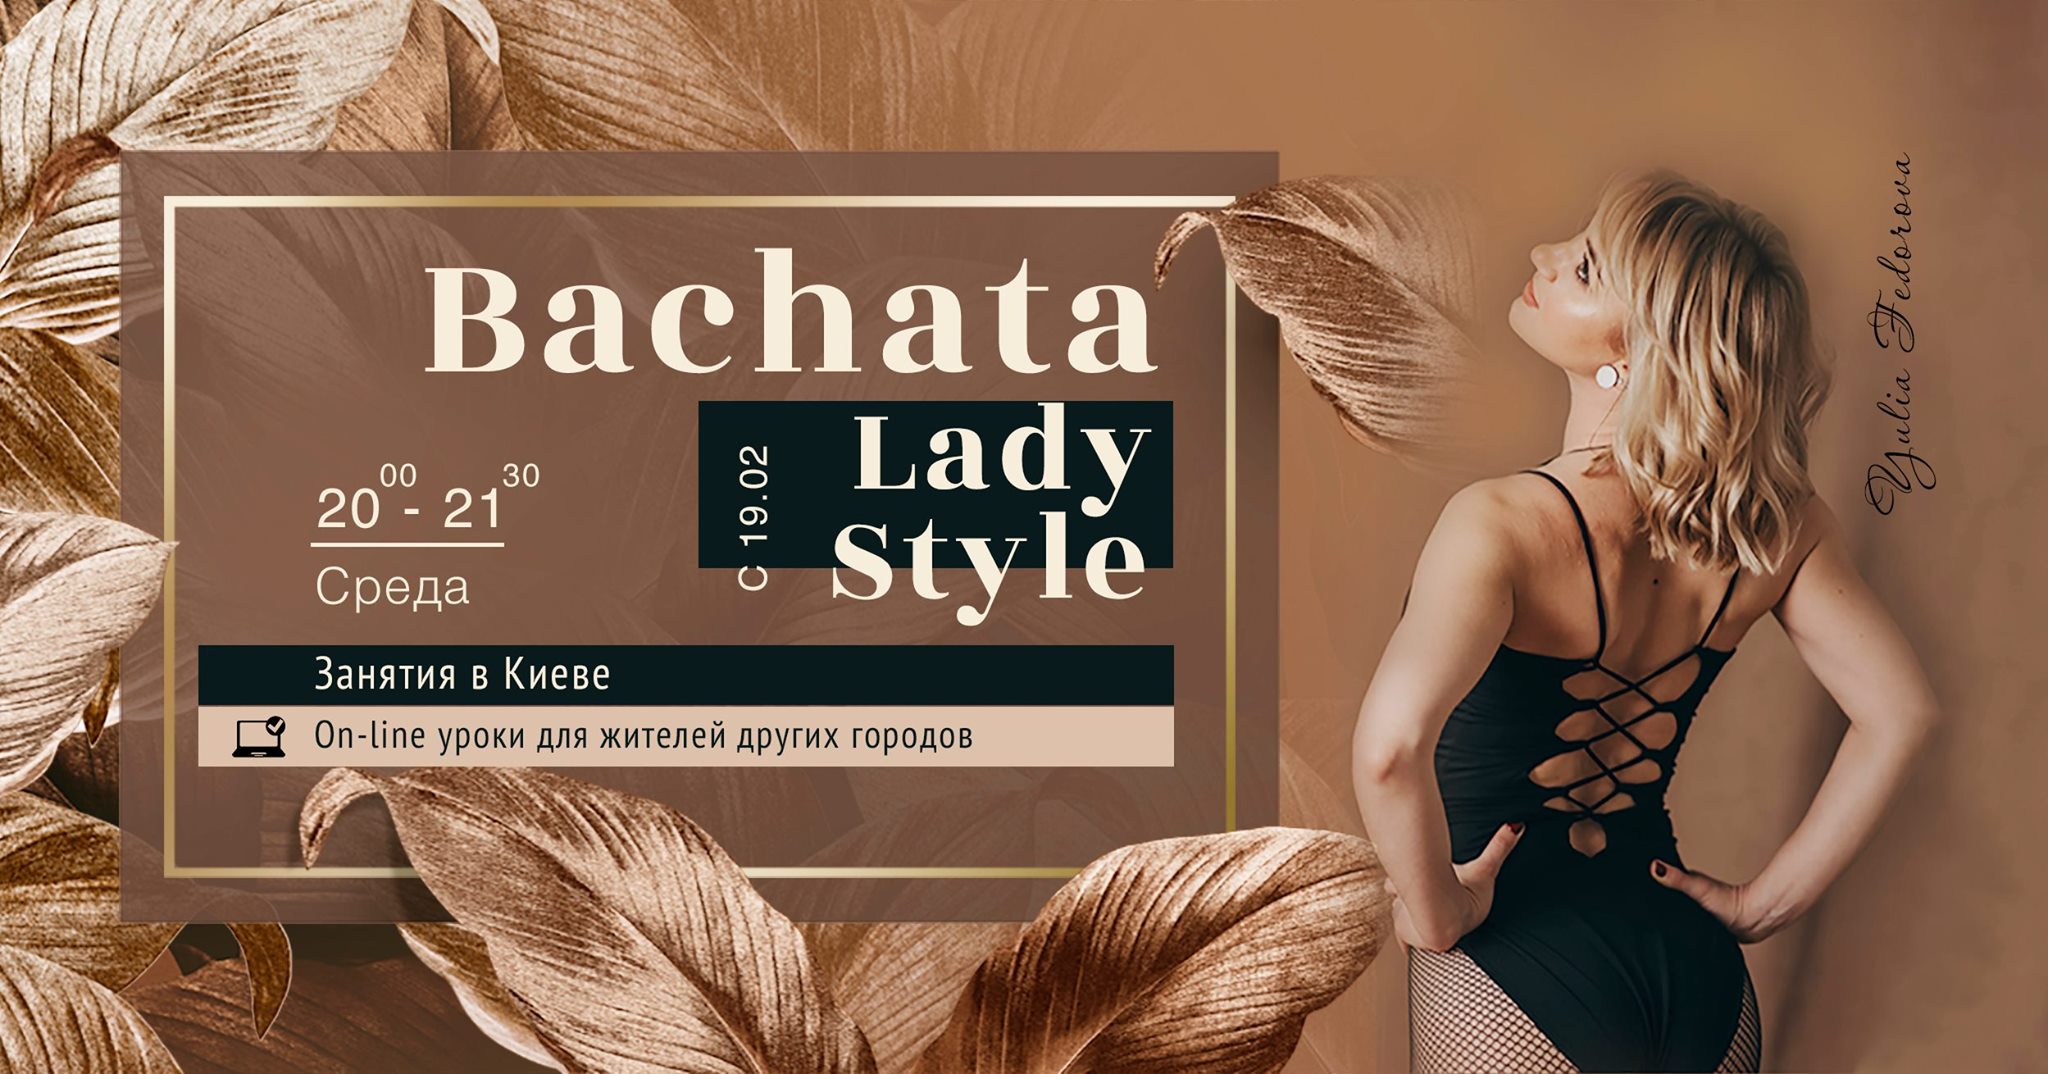 В Украине проведут онлайн-уроки танца “Bachata Ladies Style”